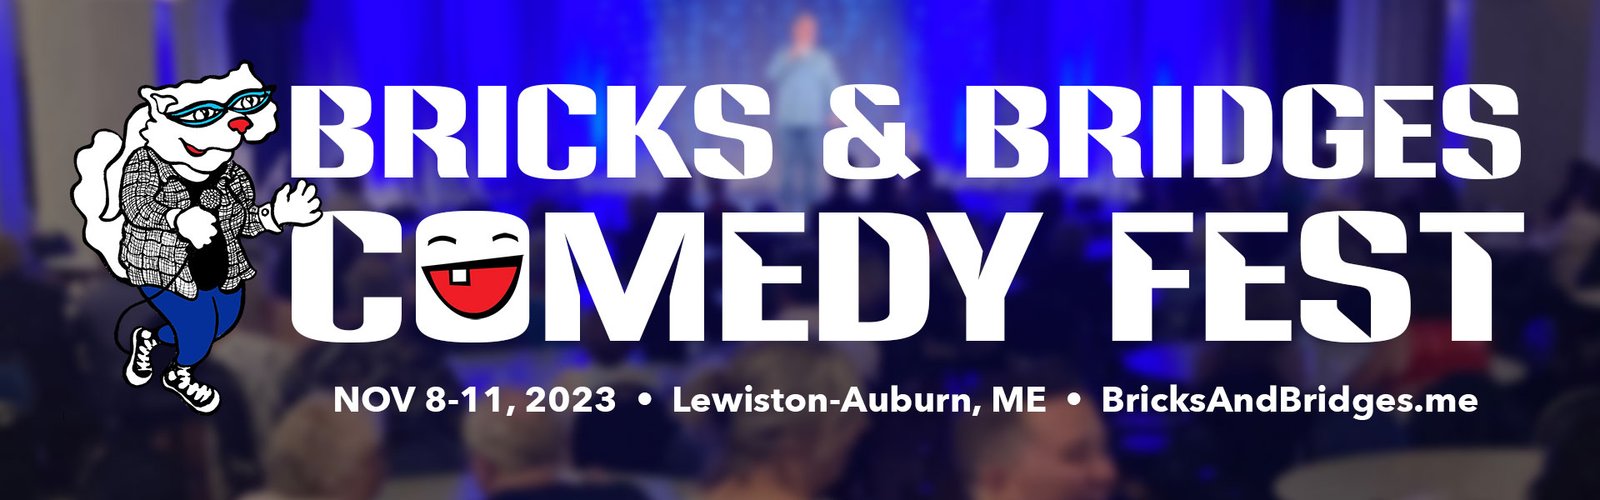 Bricks & Bridges Comedy Fest